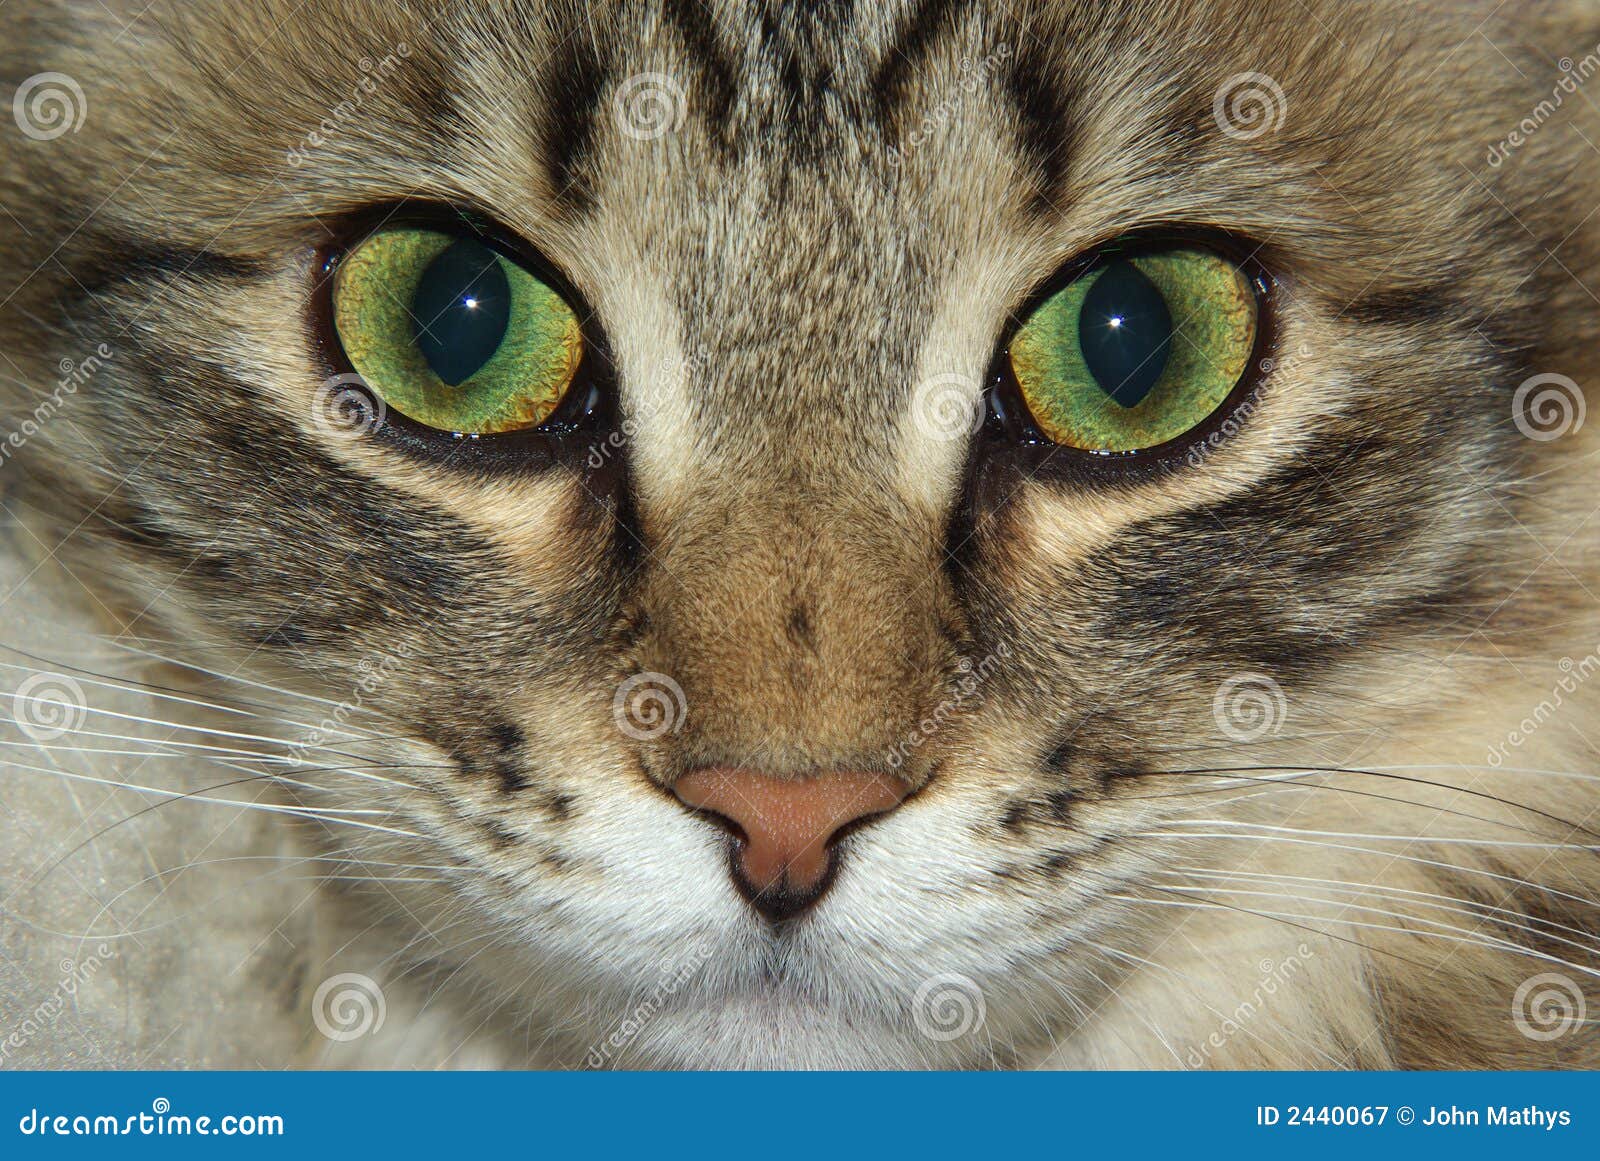 Cat Eyes Royalty Free Stock Photography - Image: 2440067